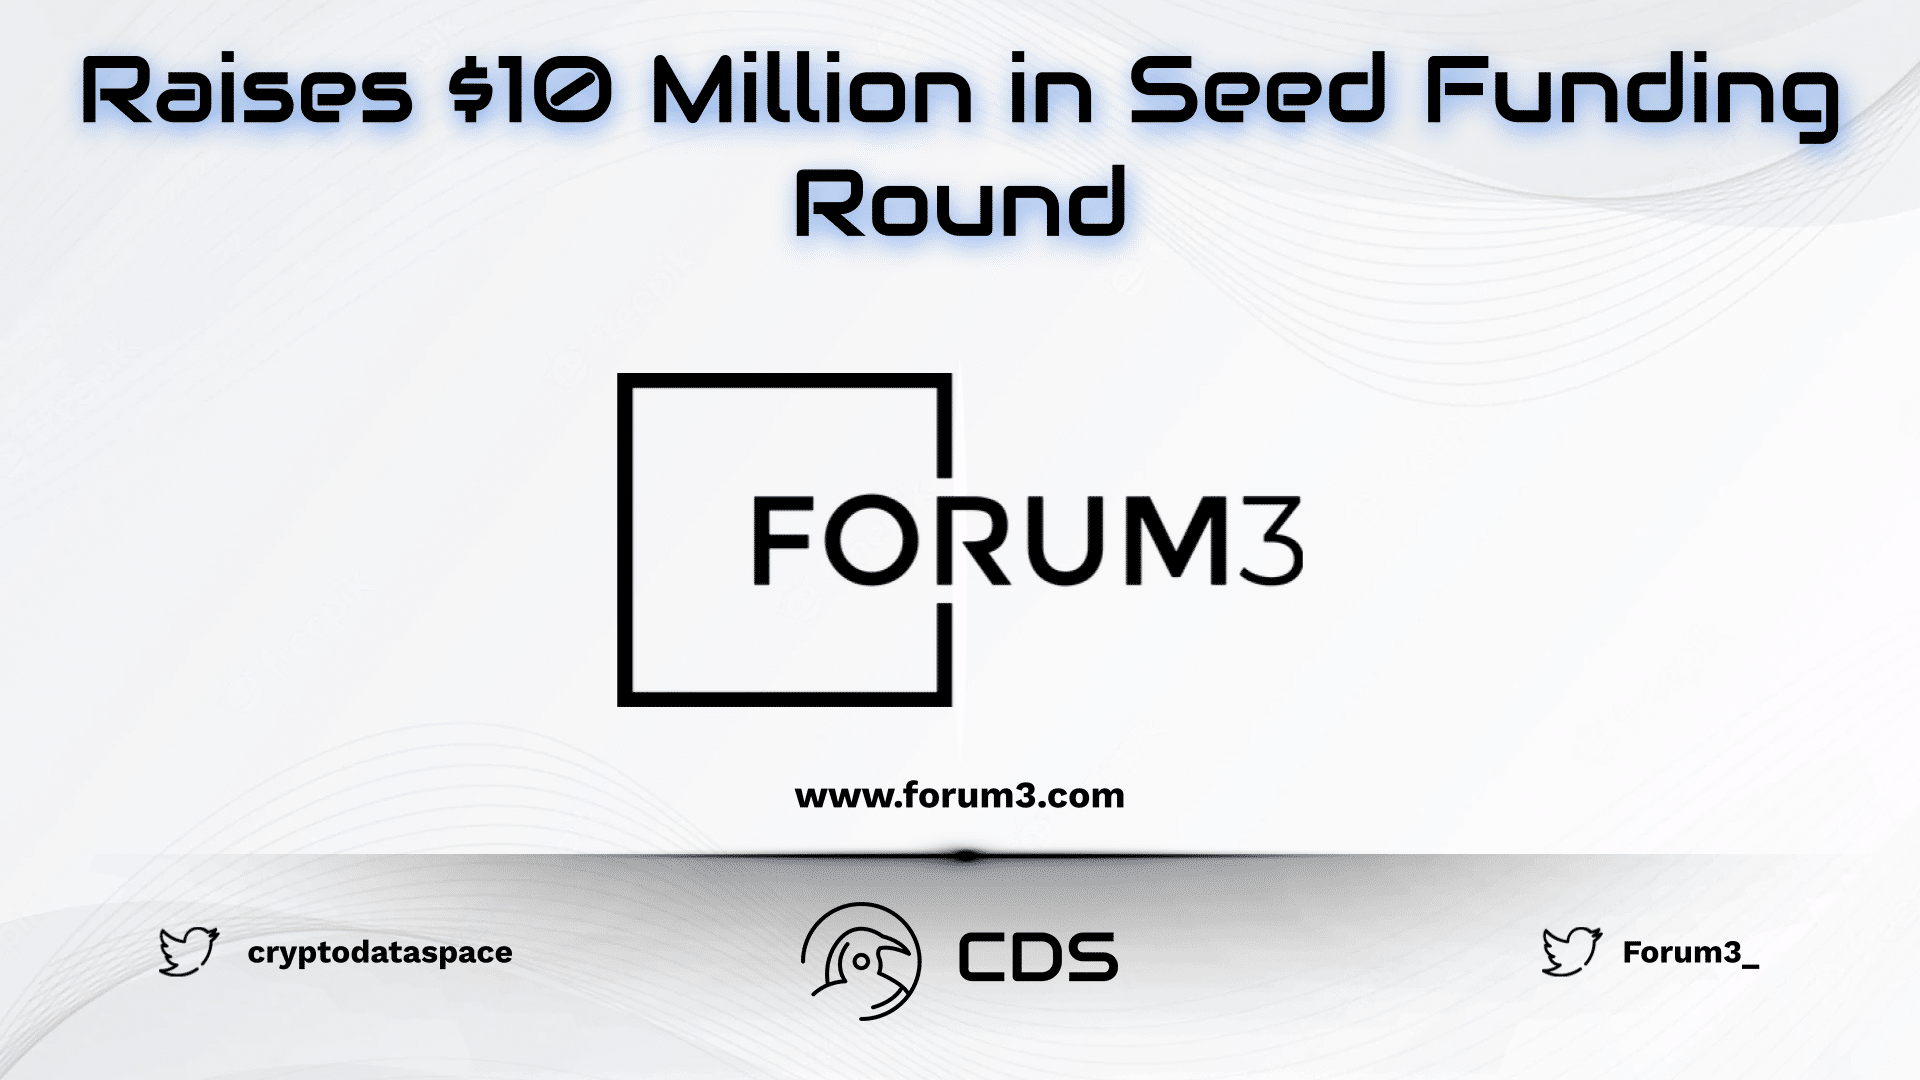 Forum3 Raises $10 Million in Seed Funding Round